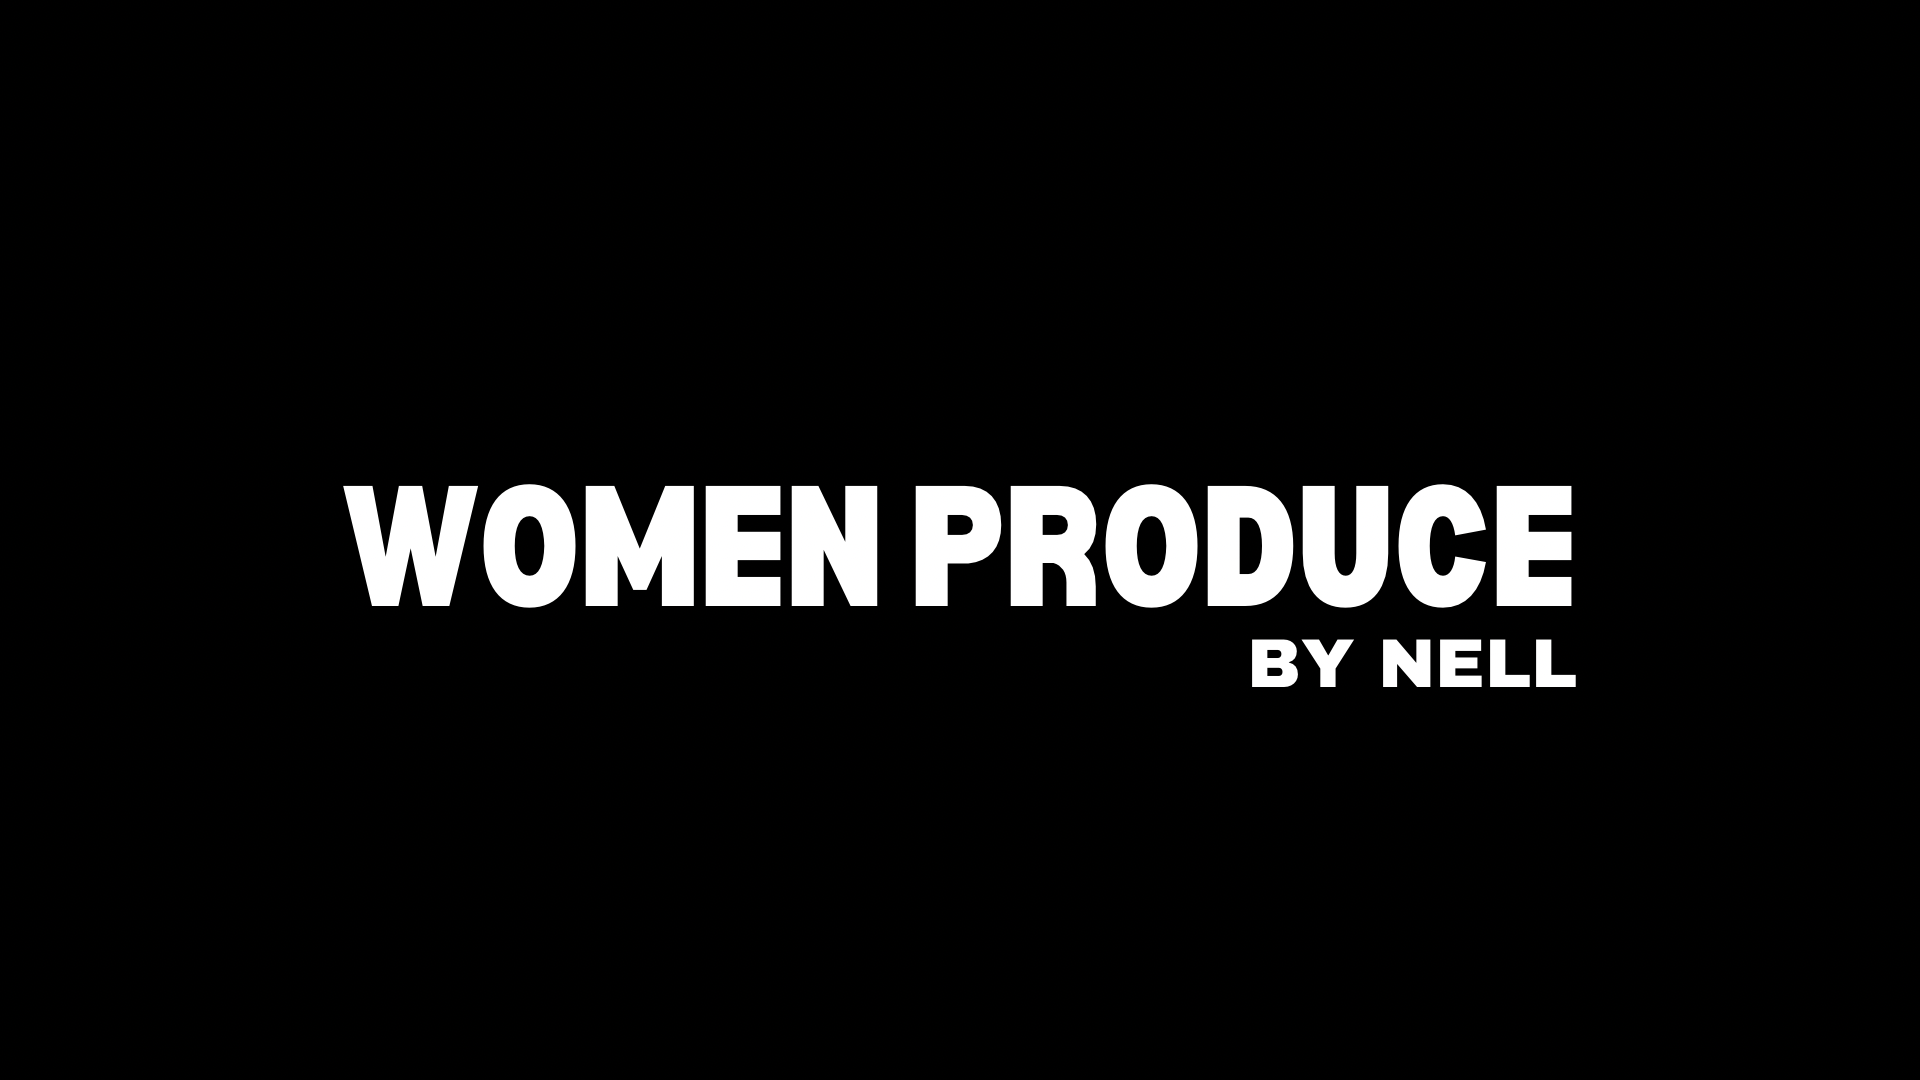 THE PROCESS — WOMEN PRODUCE